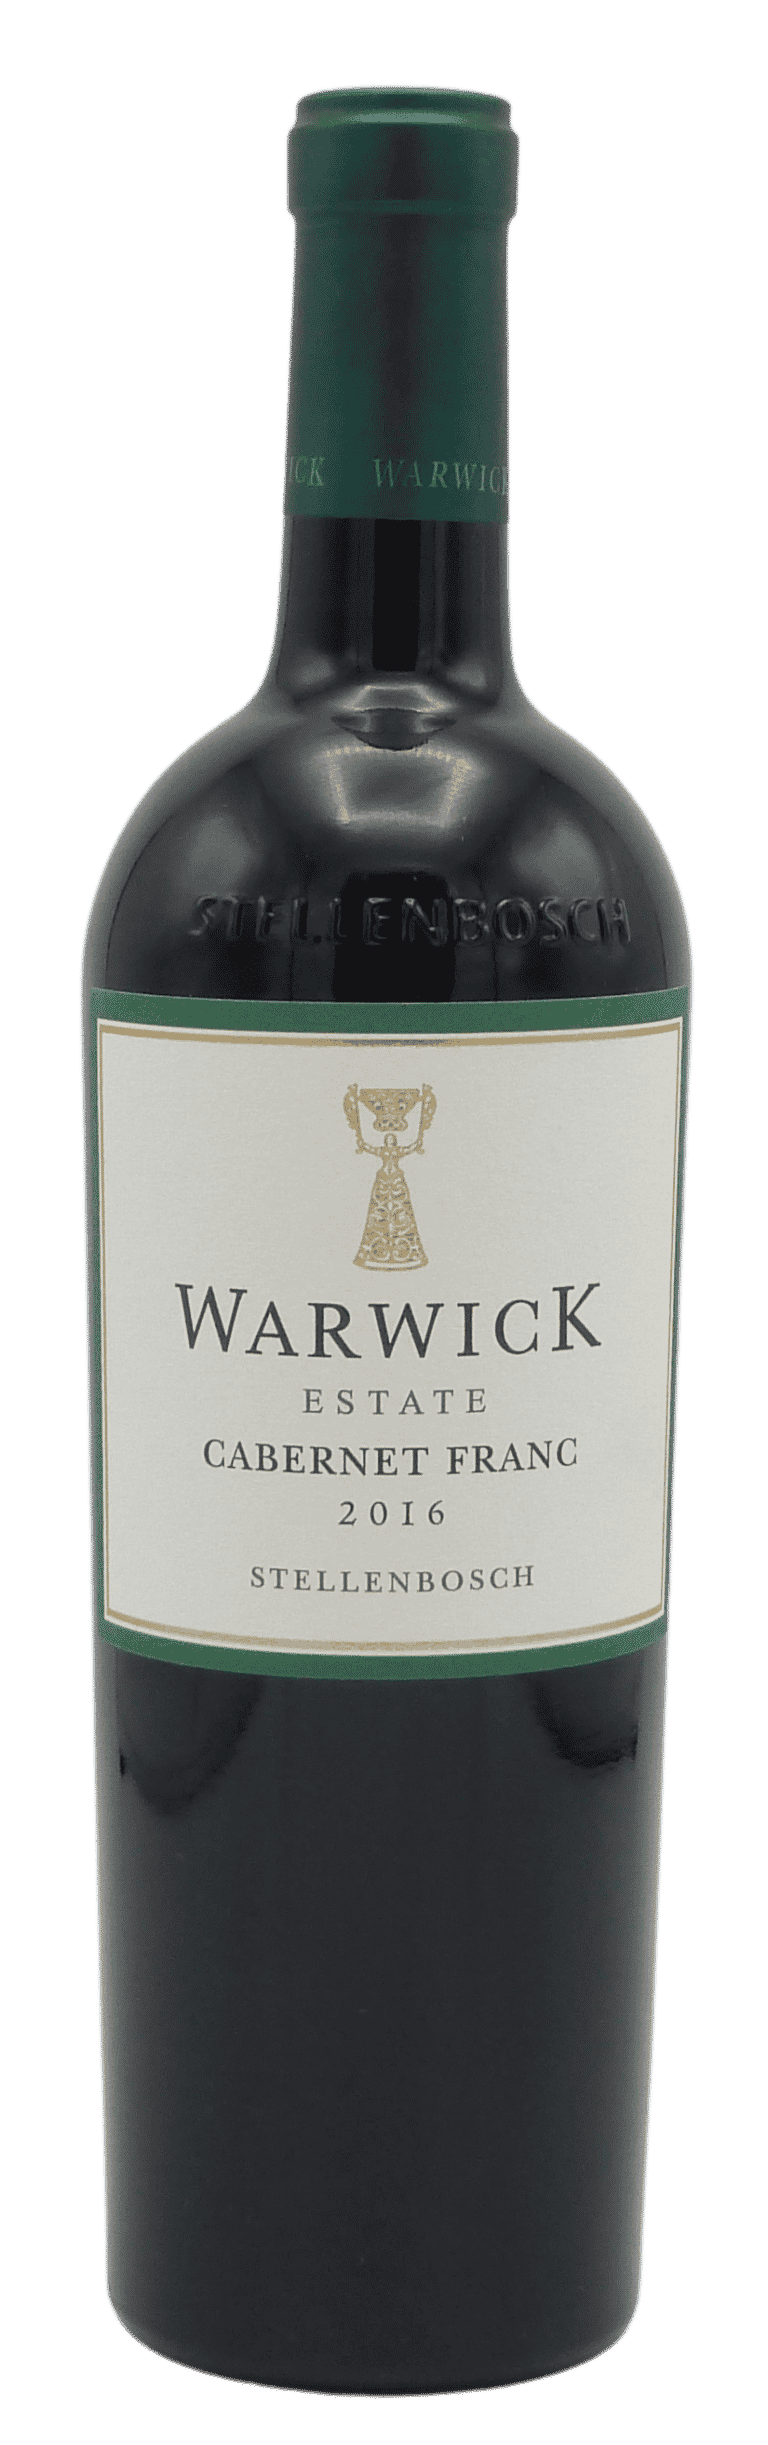 Capeandgrapes Zuid-Afrikaanse wijn Warwick Estate Cabernet Franc